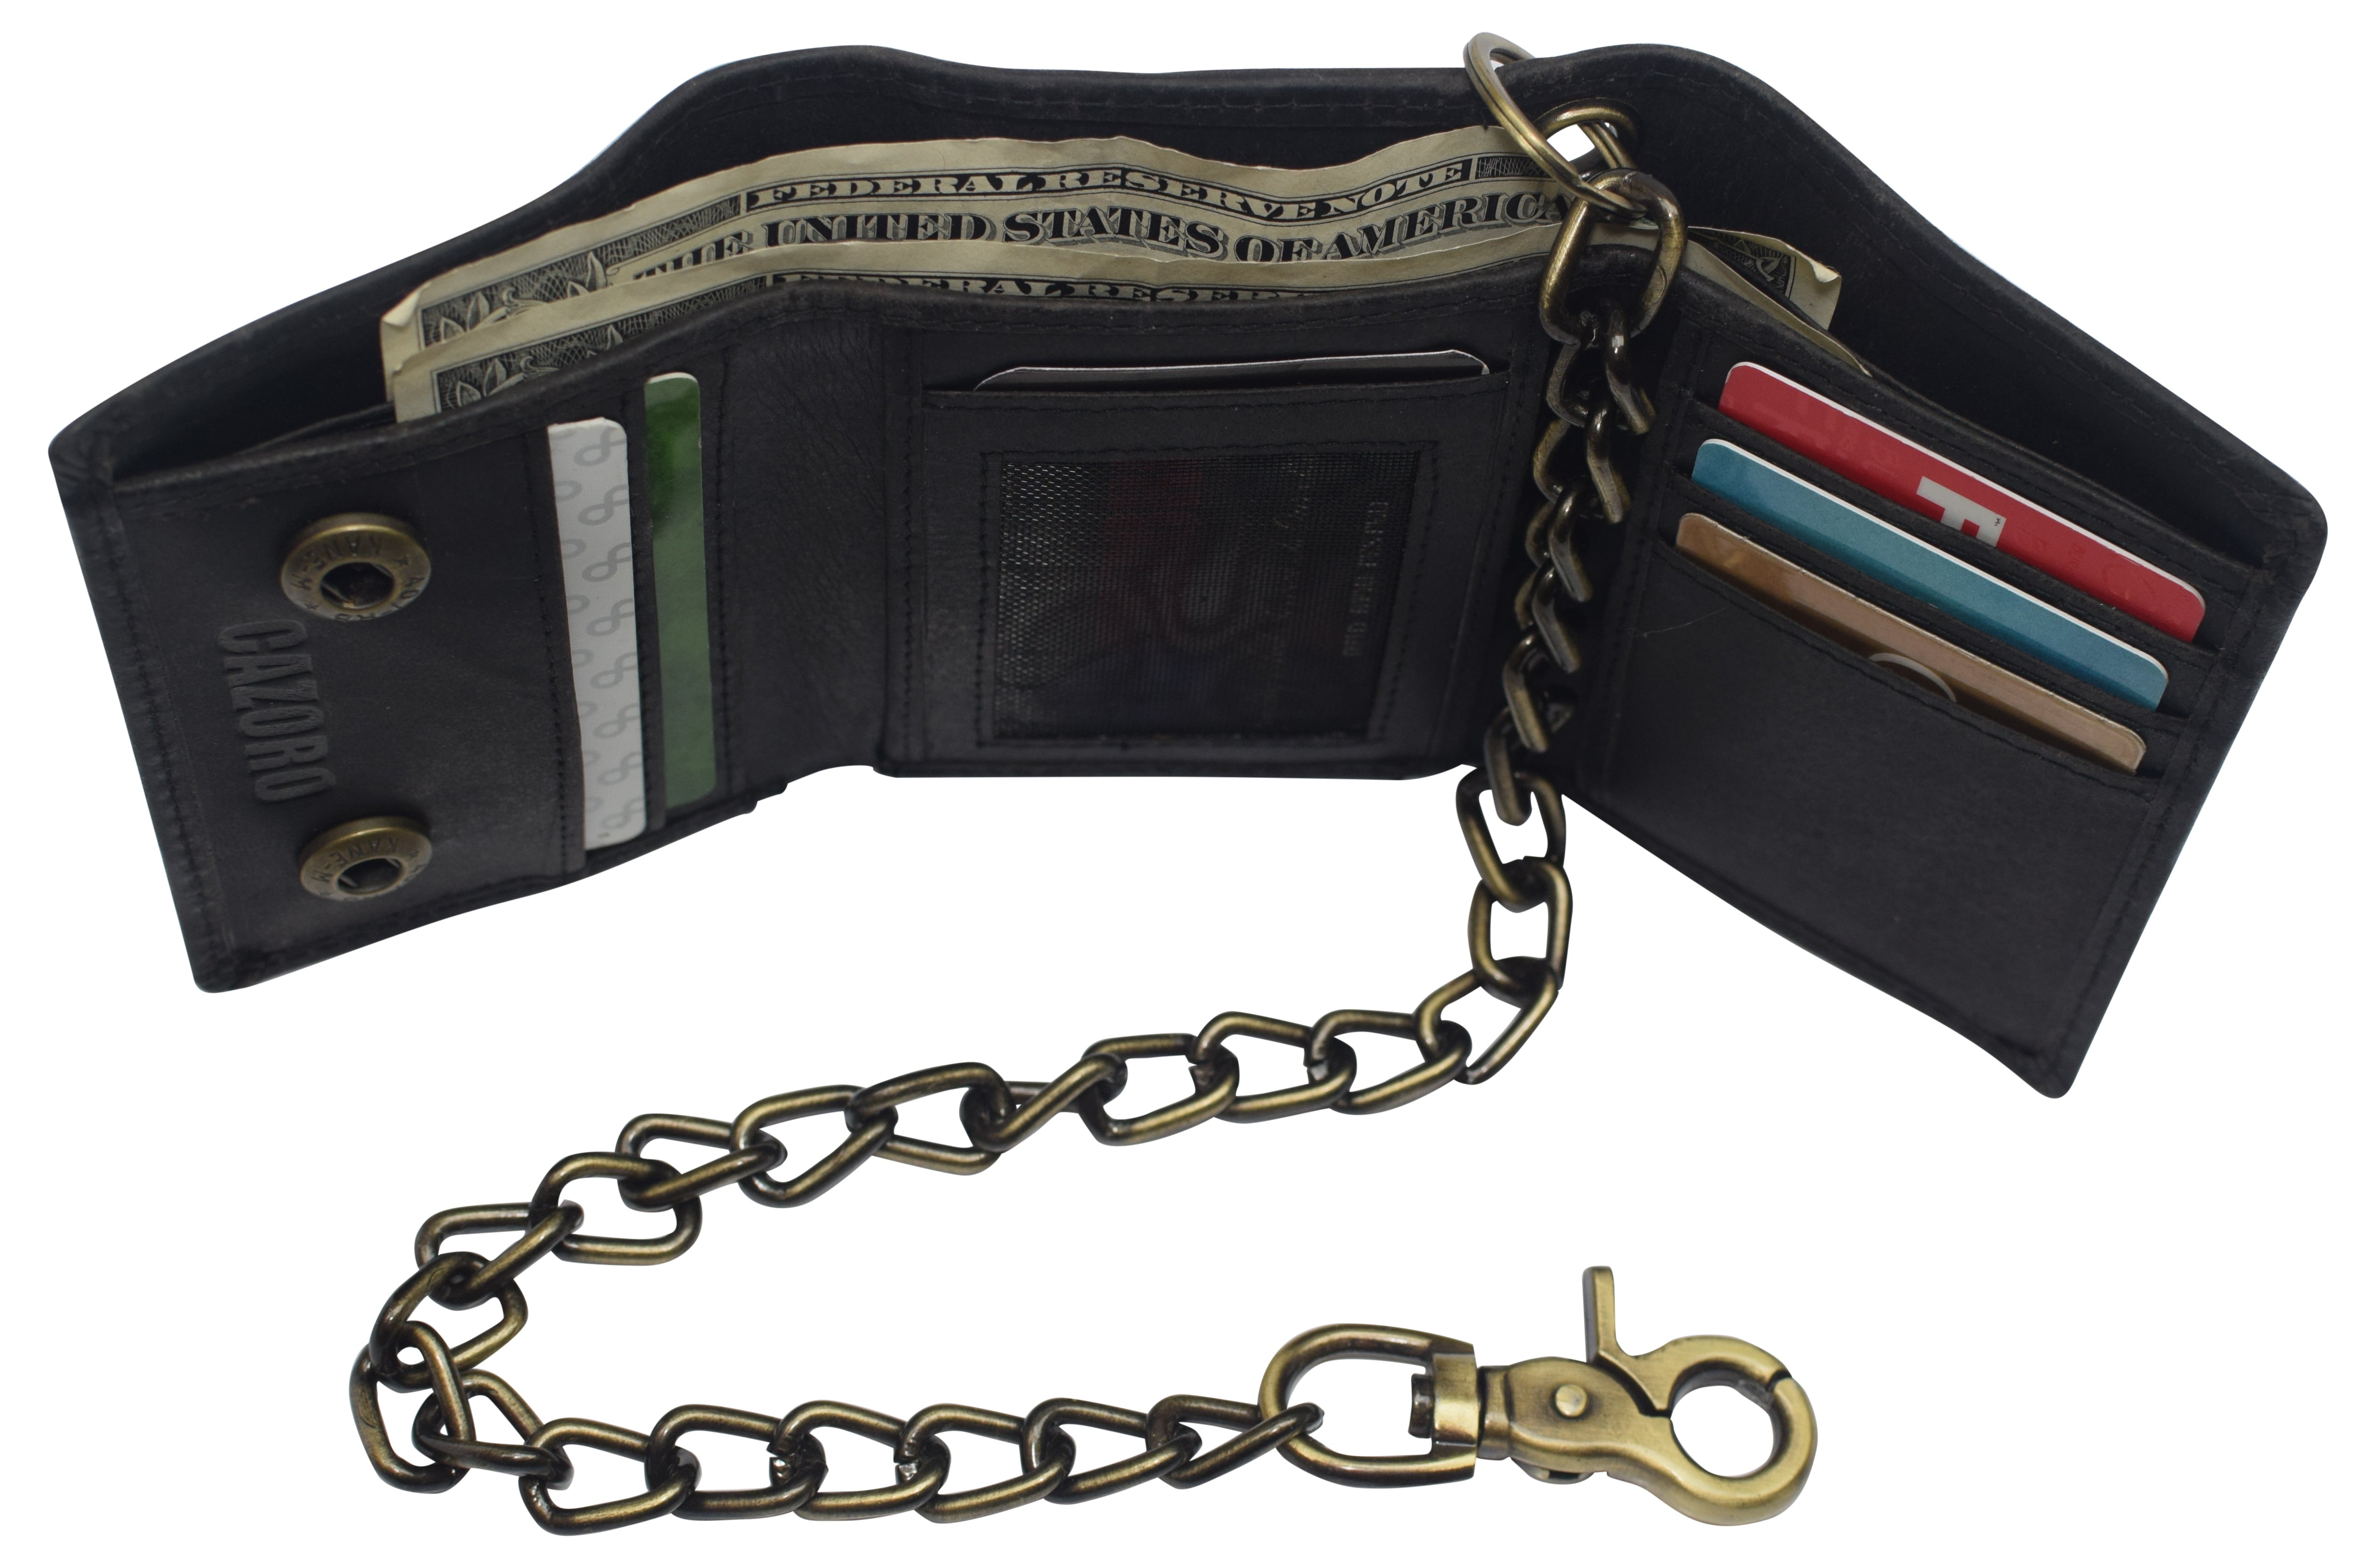 Fashion Snap Button Men's Short Wallet Vintage Leather Coin Purse Tri Fold  Card Holder Zipper Male Money Wallet